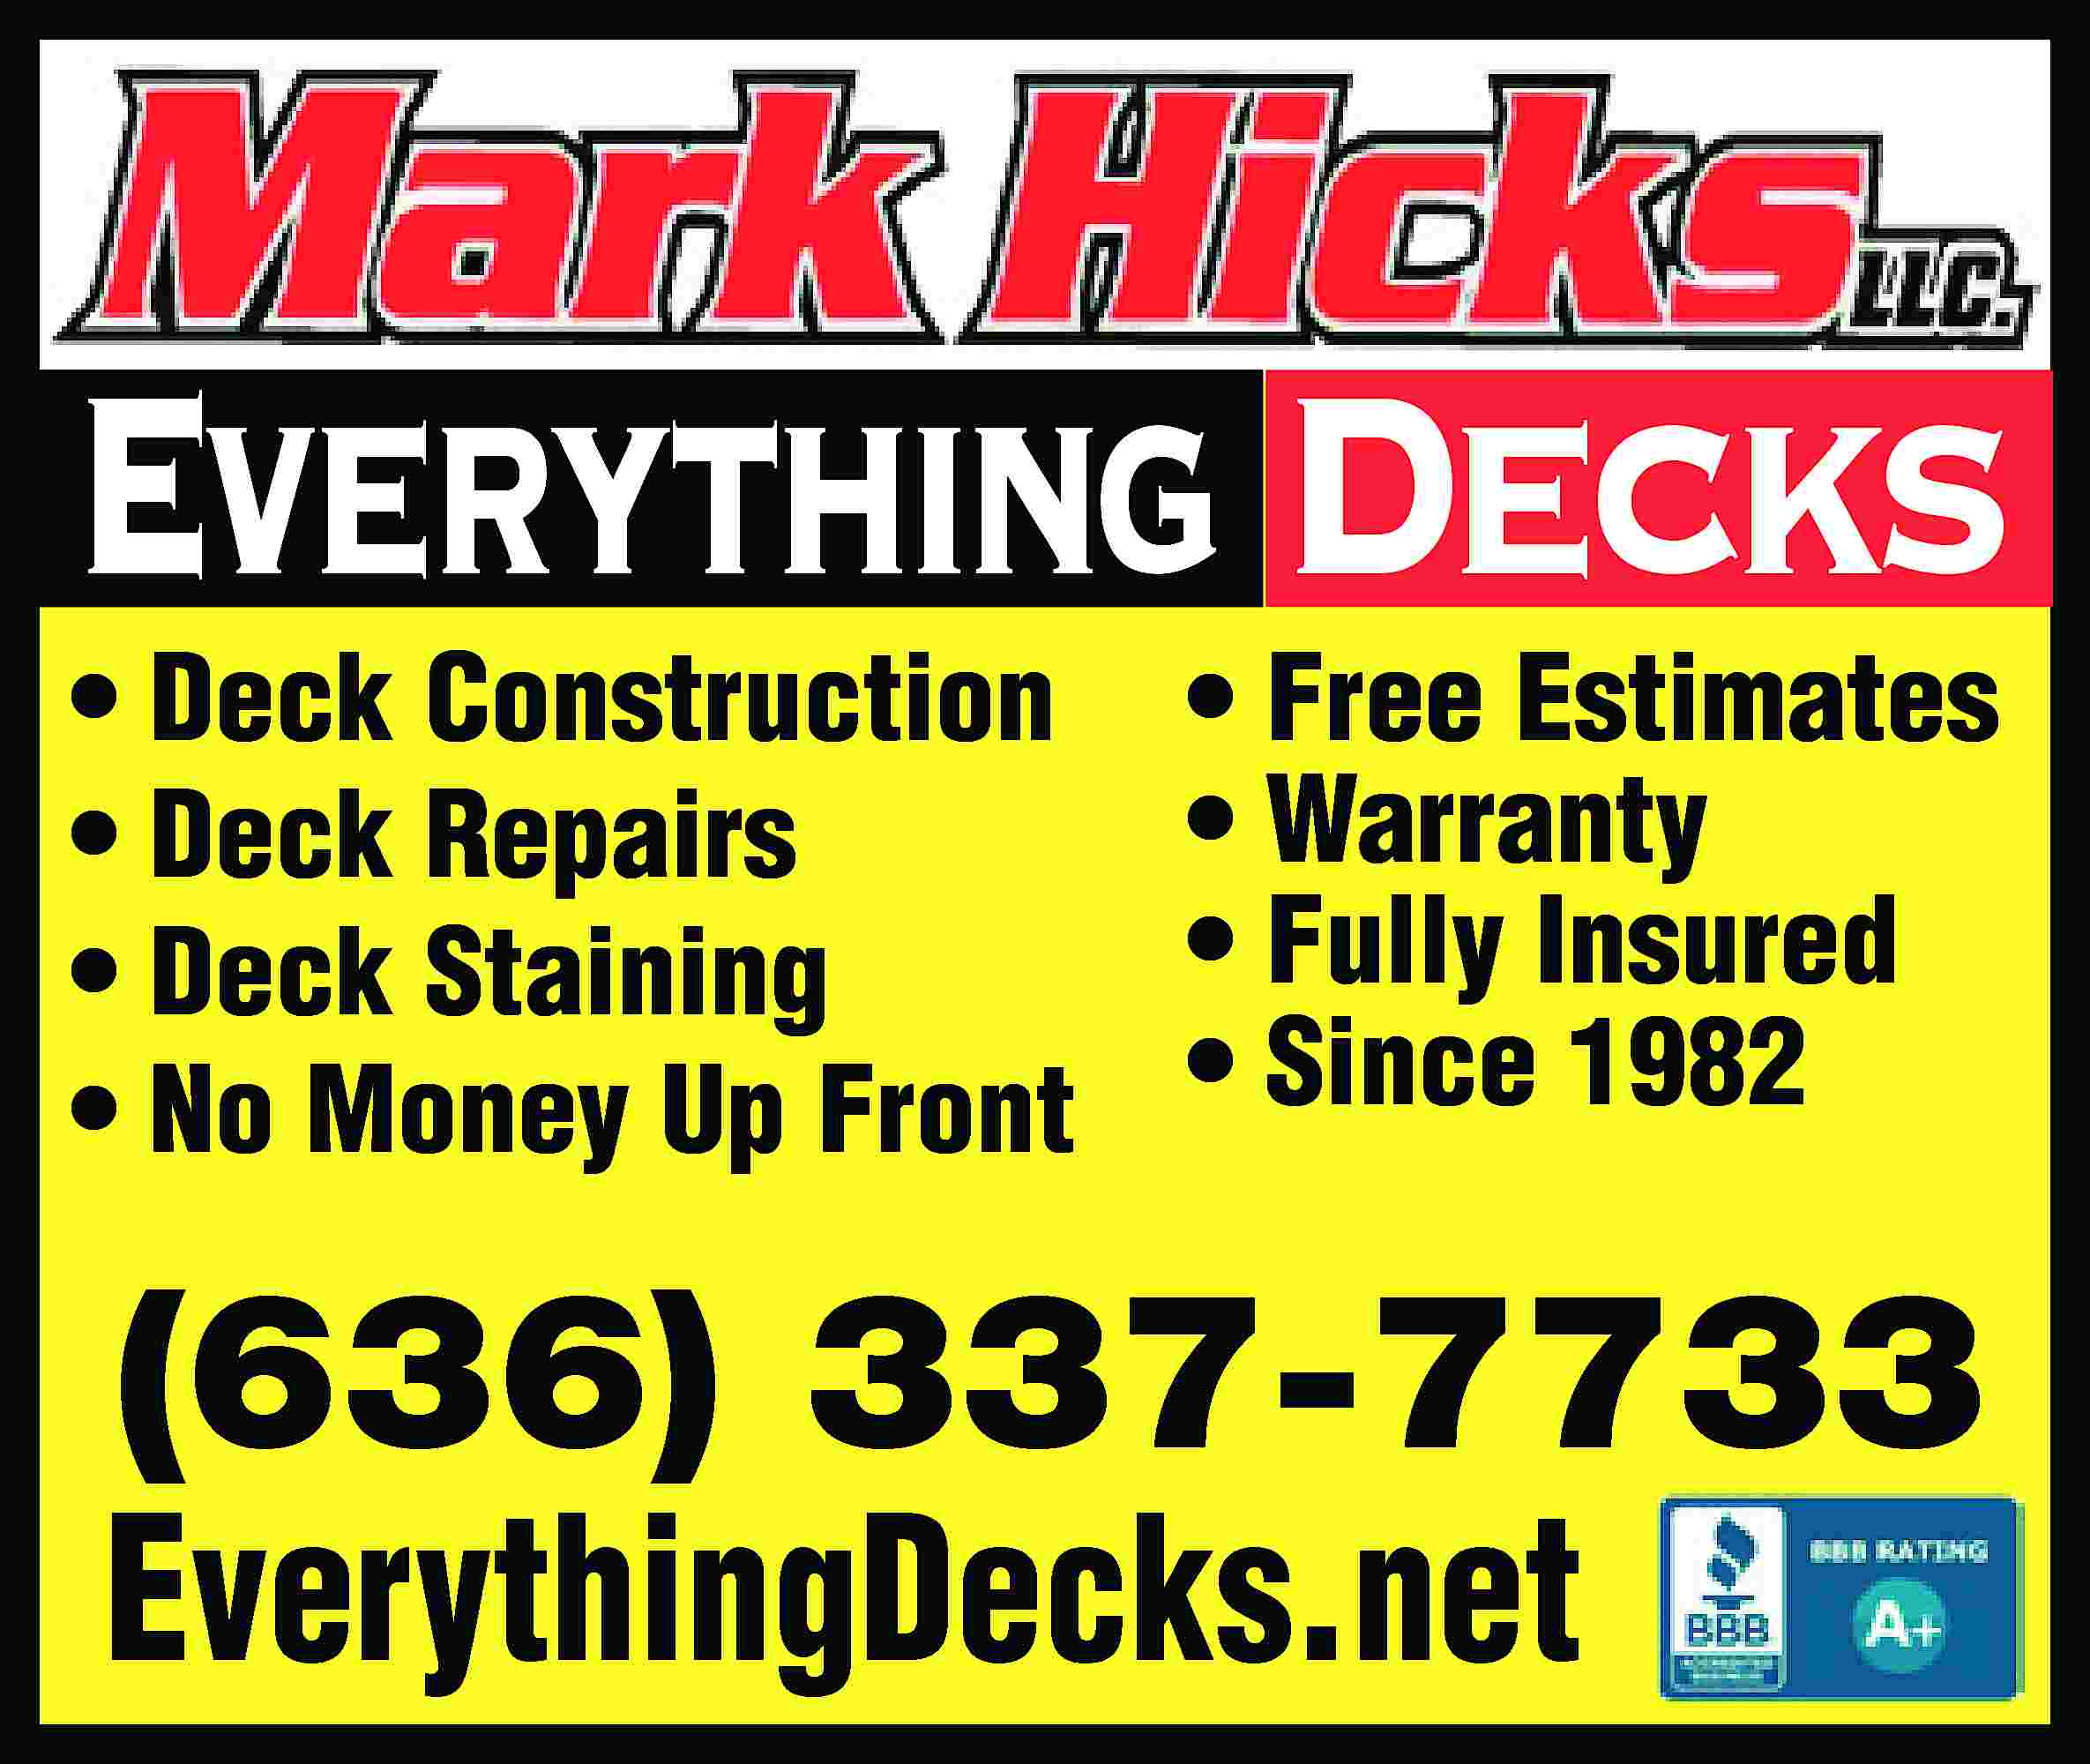 Everything Decks • Deck Construction  Everything Decks • Deck Construction • Deck Repairs • Deck Staining • No Money Up Front • Free Estimates • Warranty • Fully Insured • Since 1982 (636) 337-7733 EverythingDecks.net